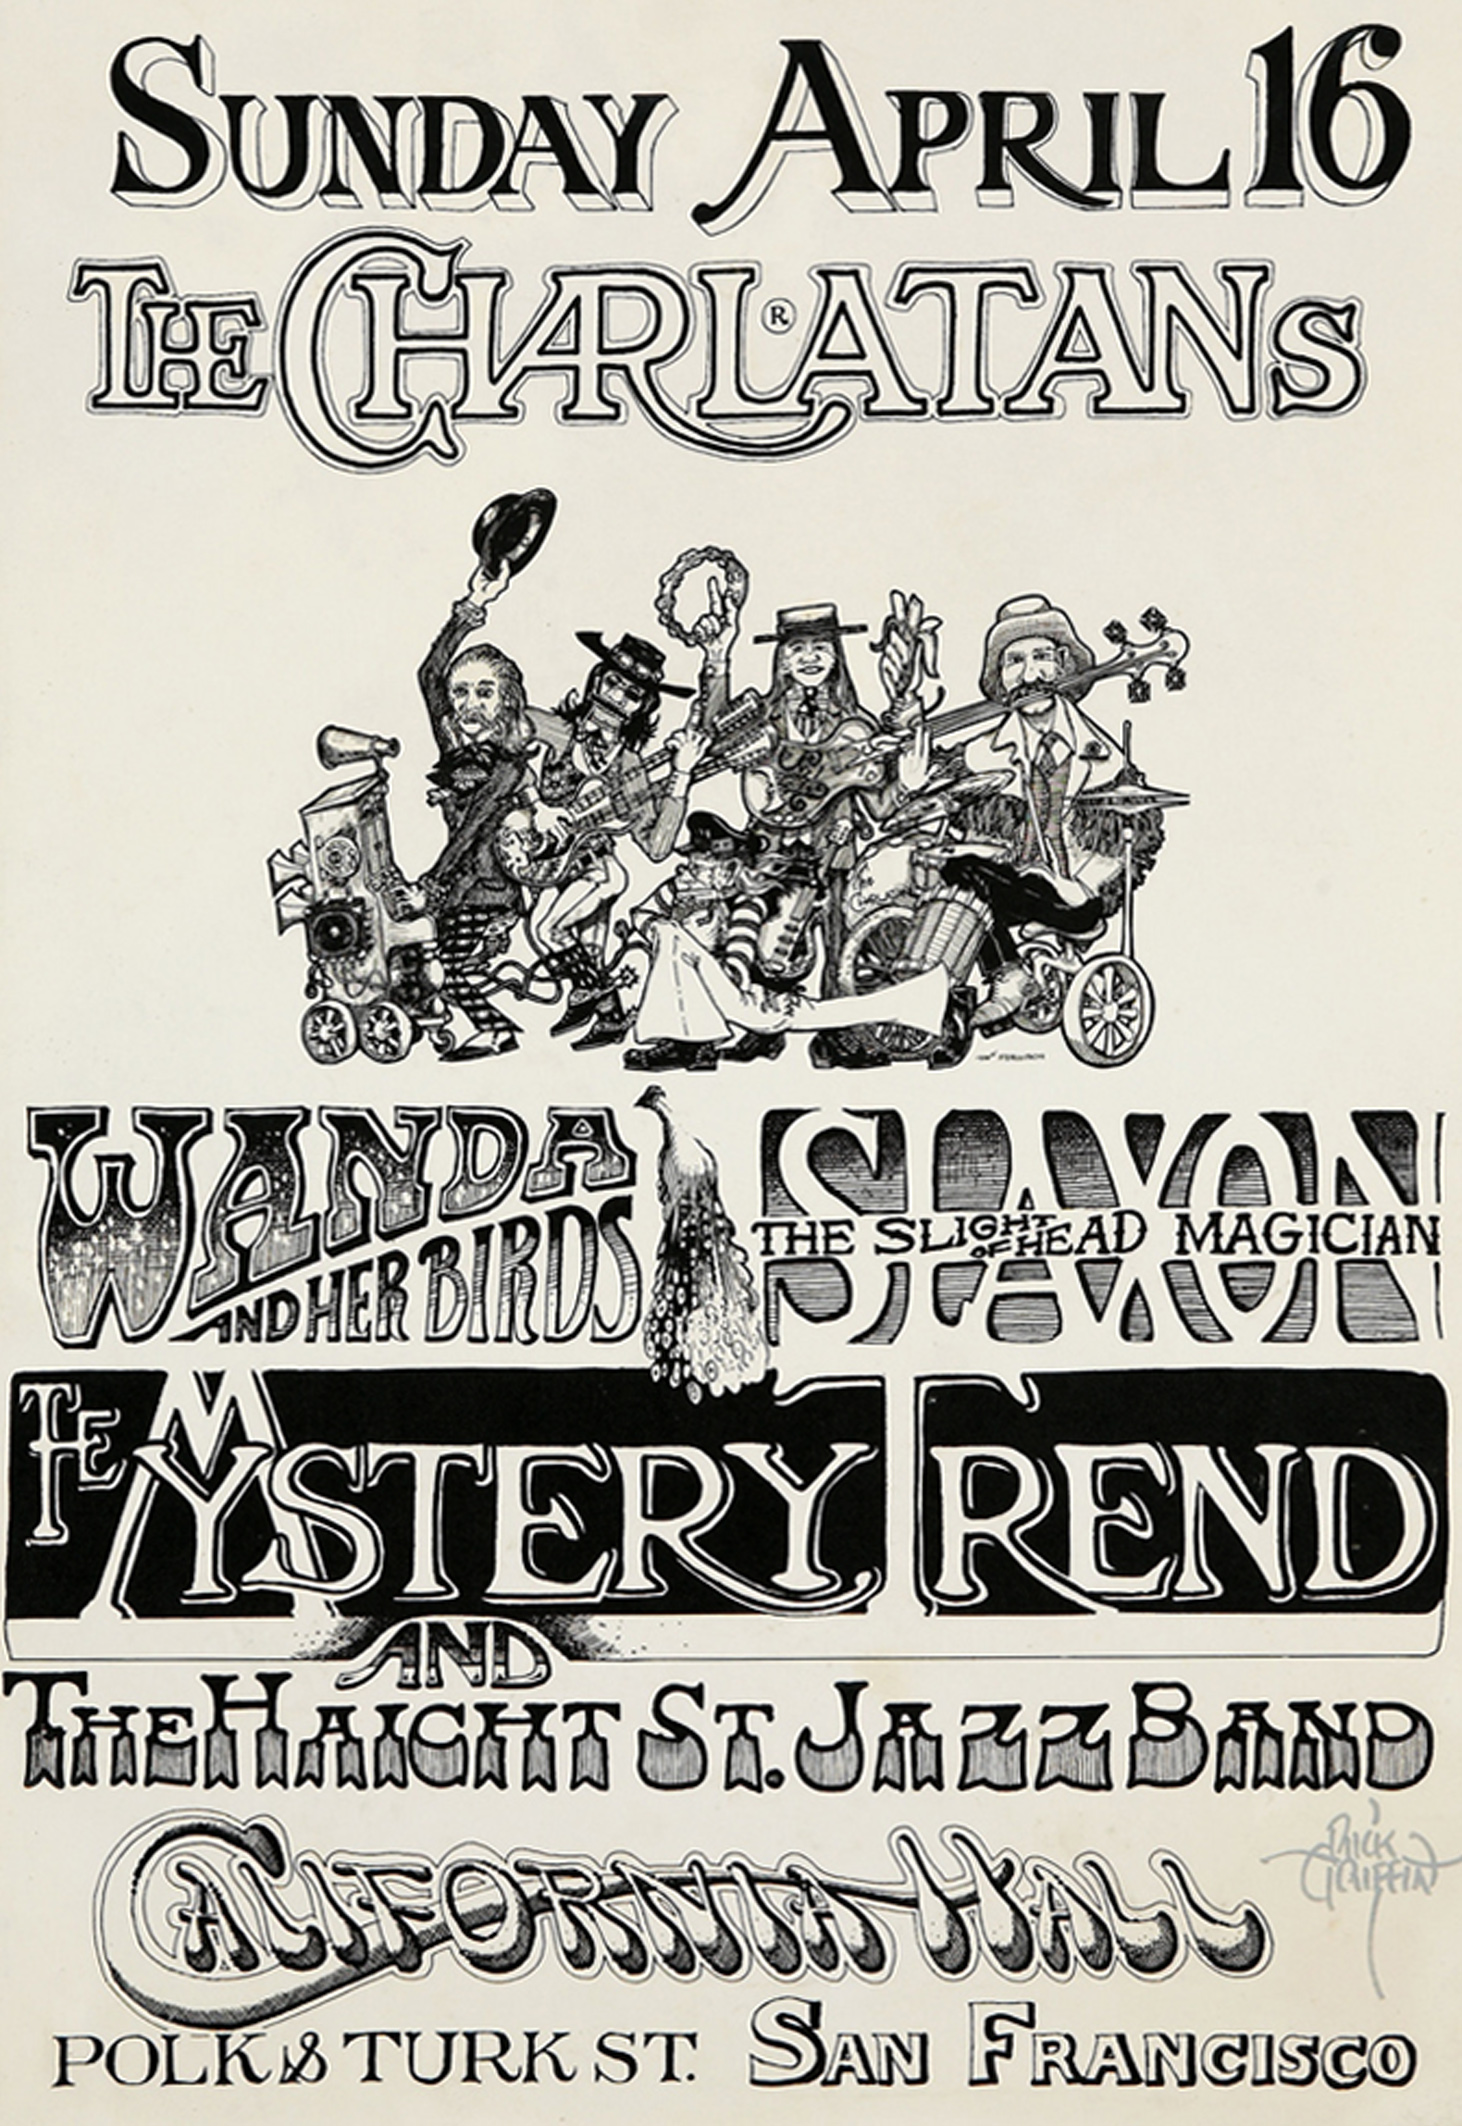 Charlatans, Mystery Trend California Hall (1966)